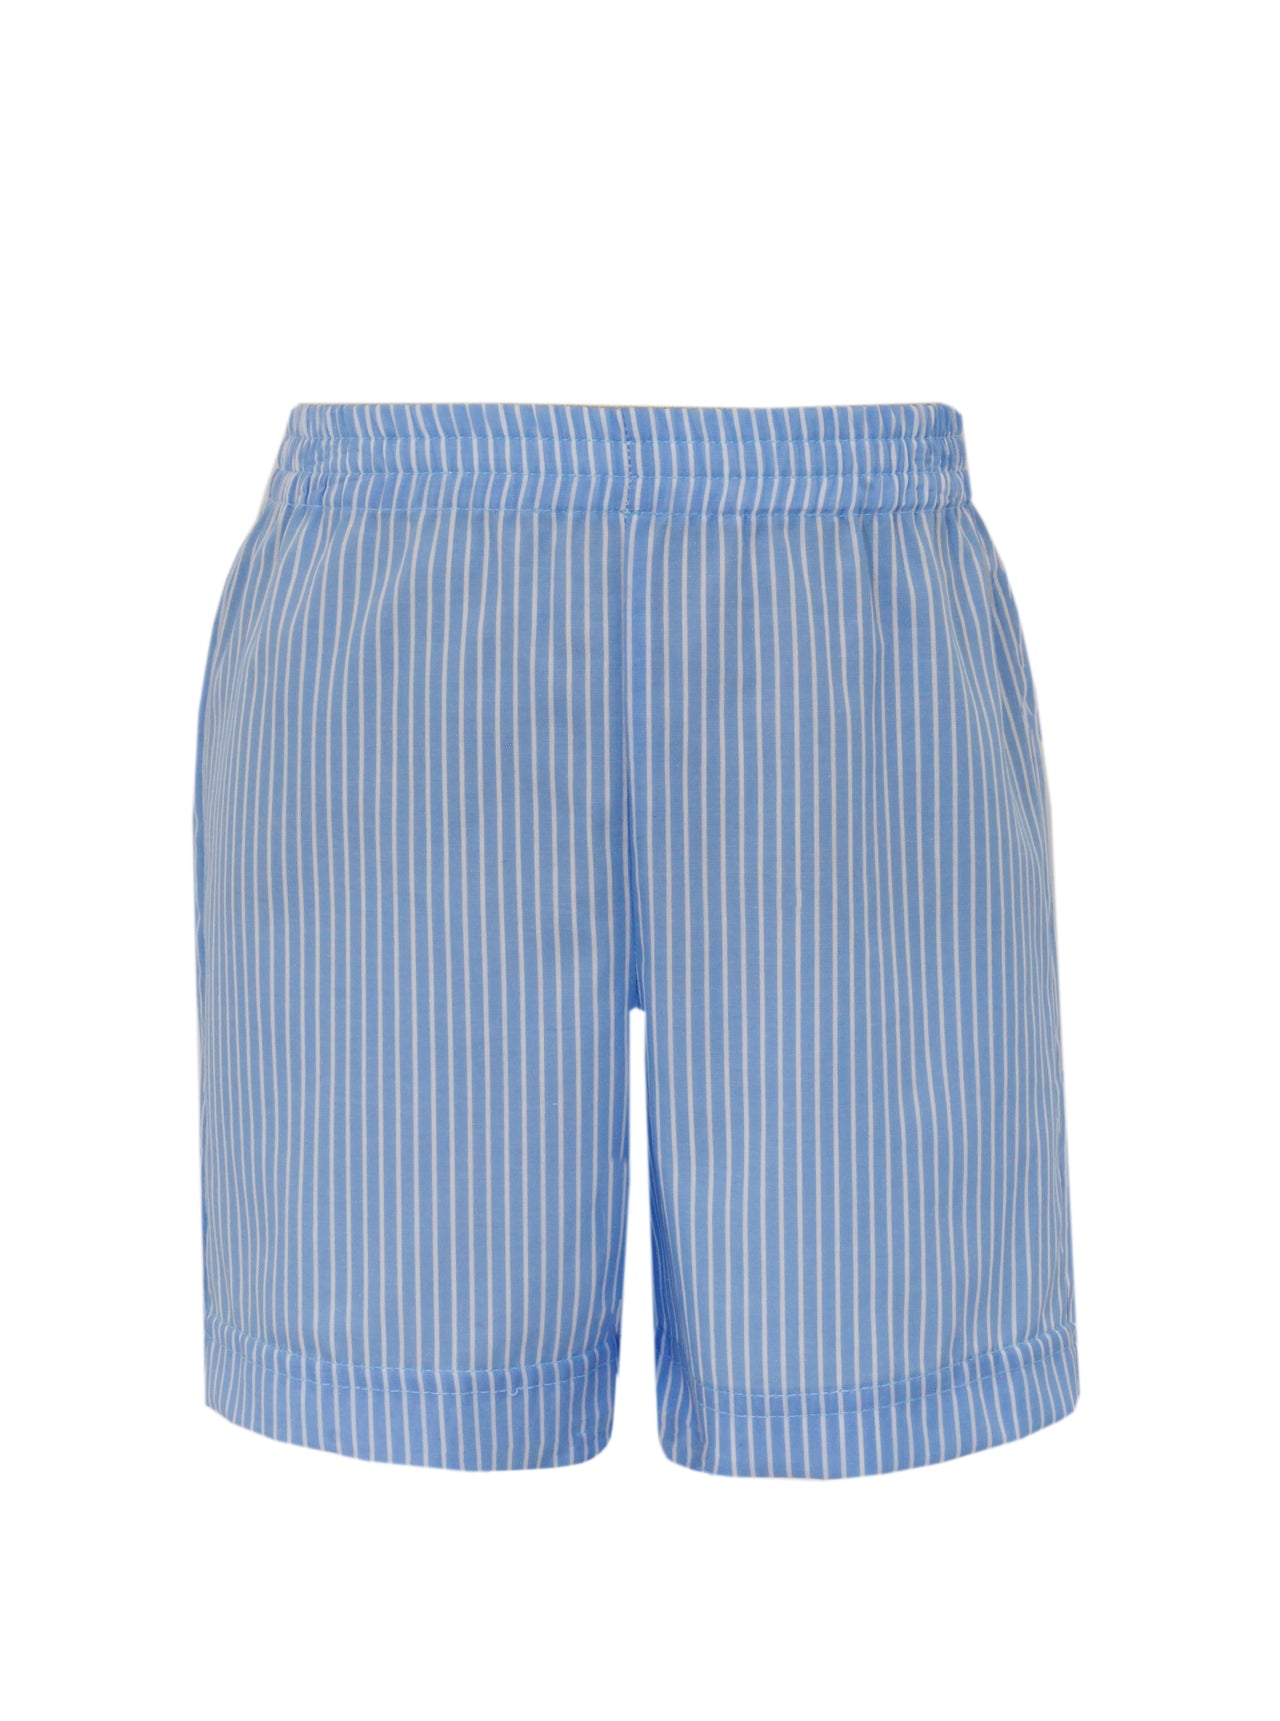 Anavini Zoo White Knit Boy's T-Shirt & Blue Stripe Shorts  505P/505SB-VS24 5101